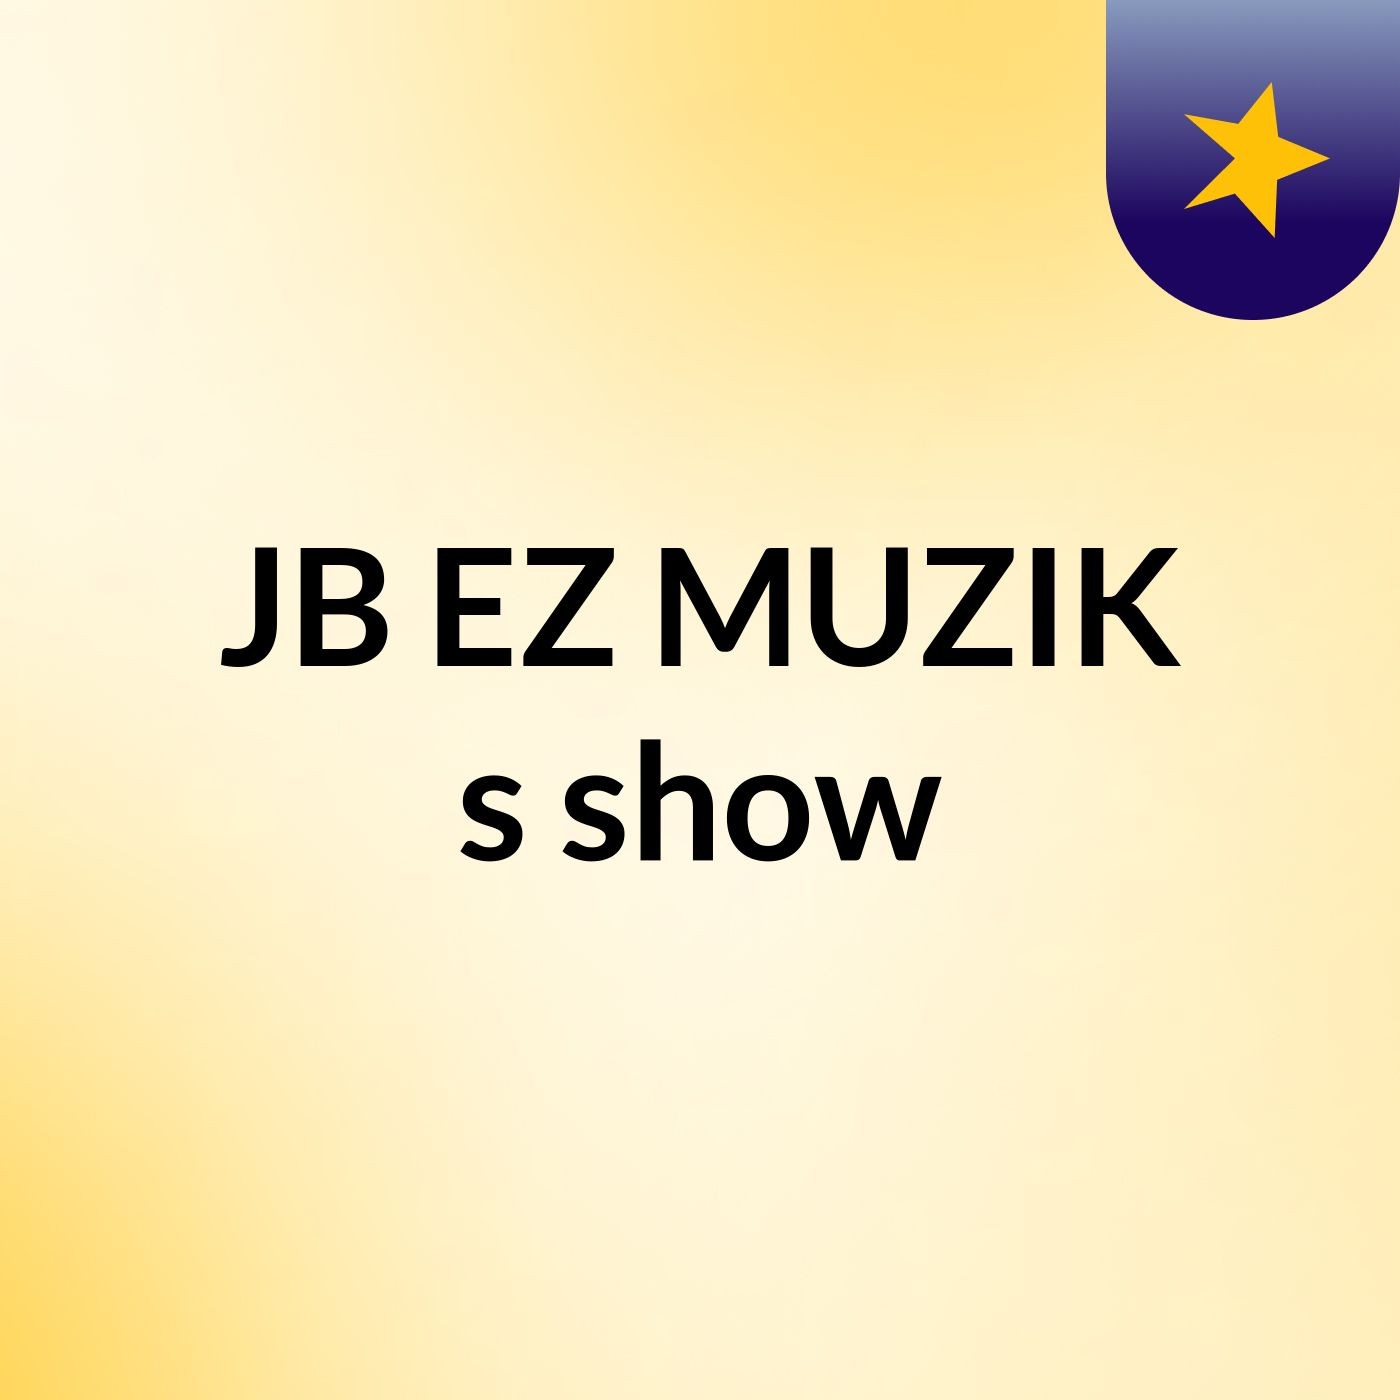 JB EZ MUZIK's show